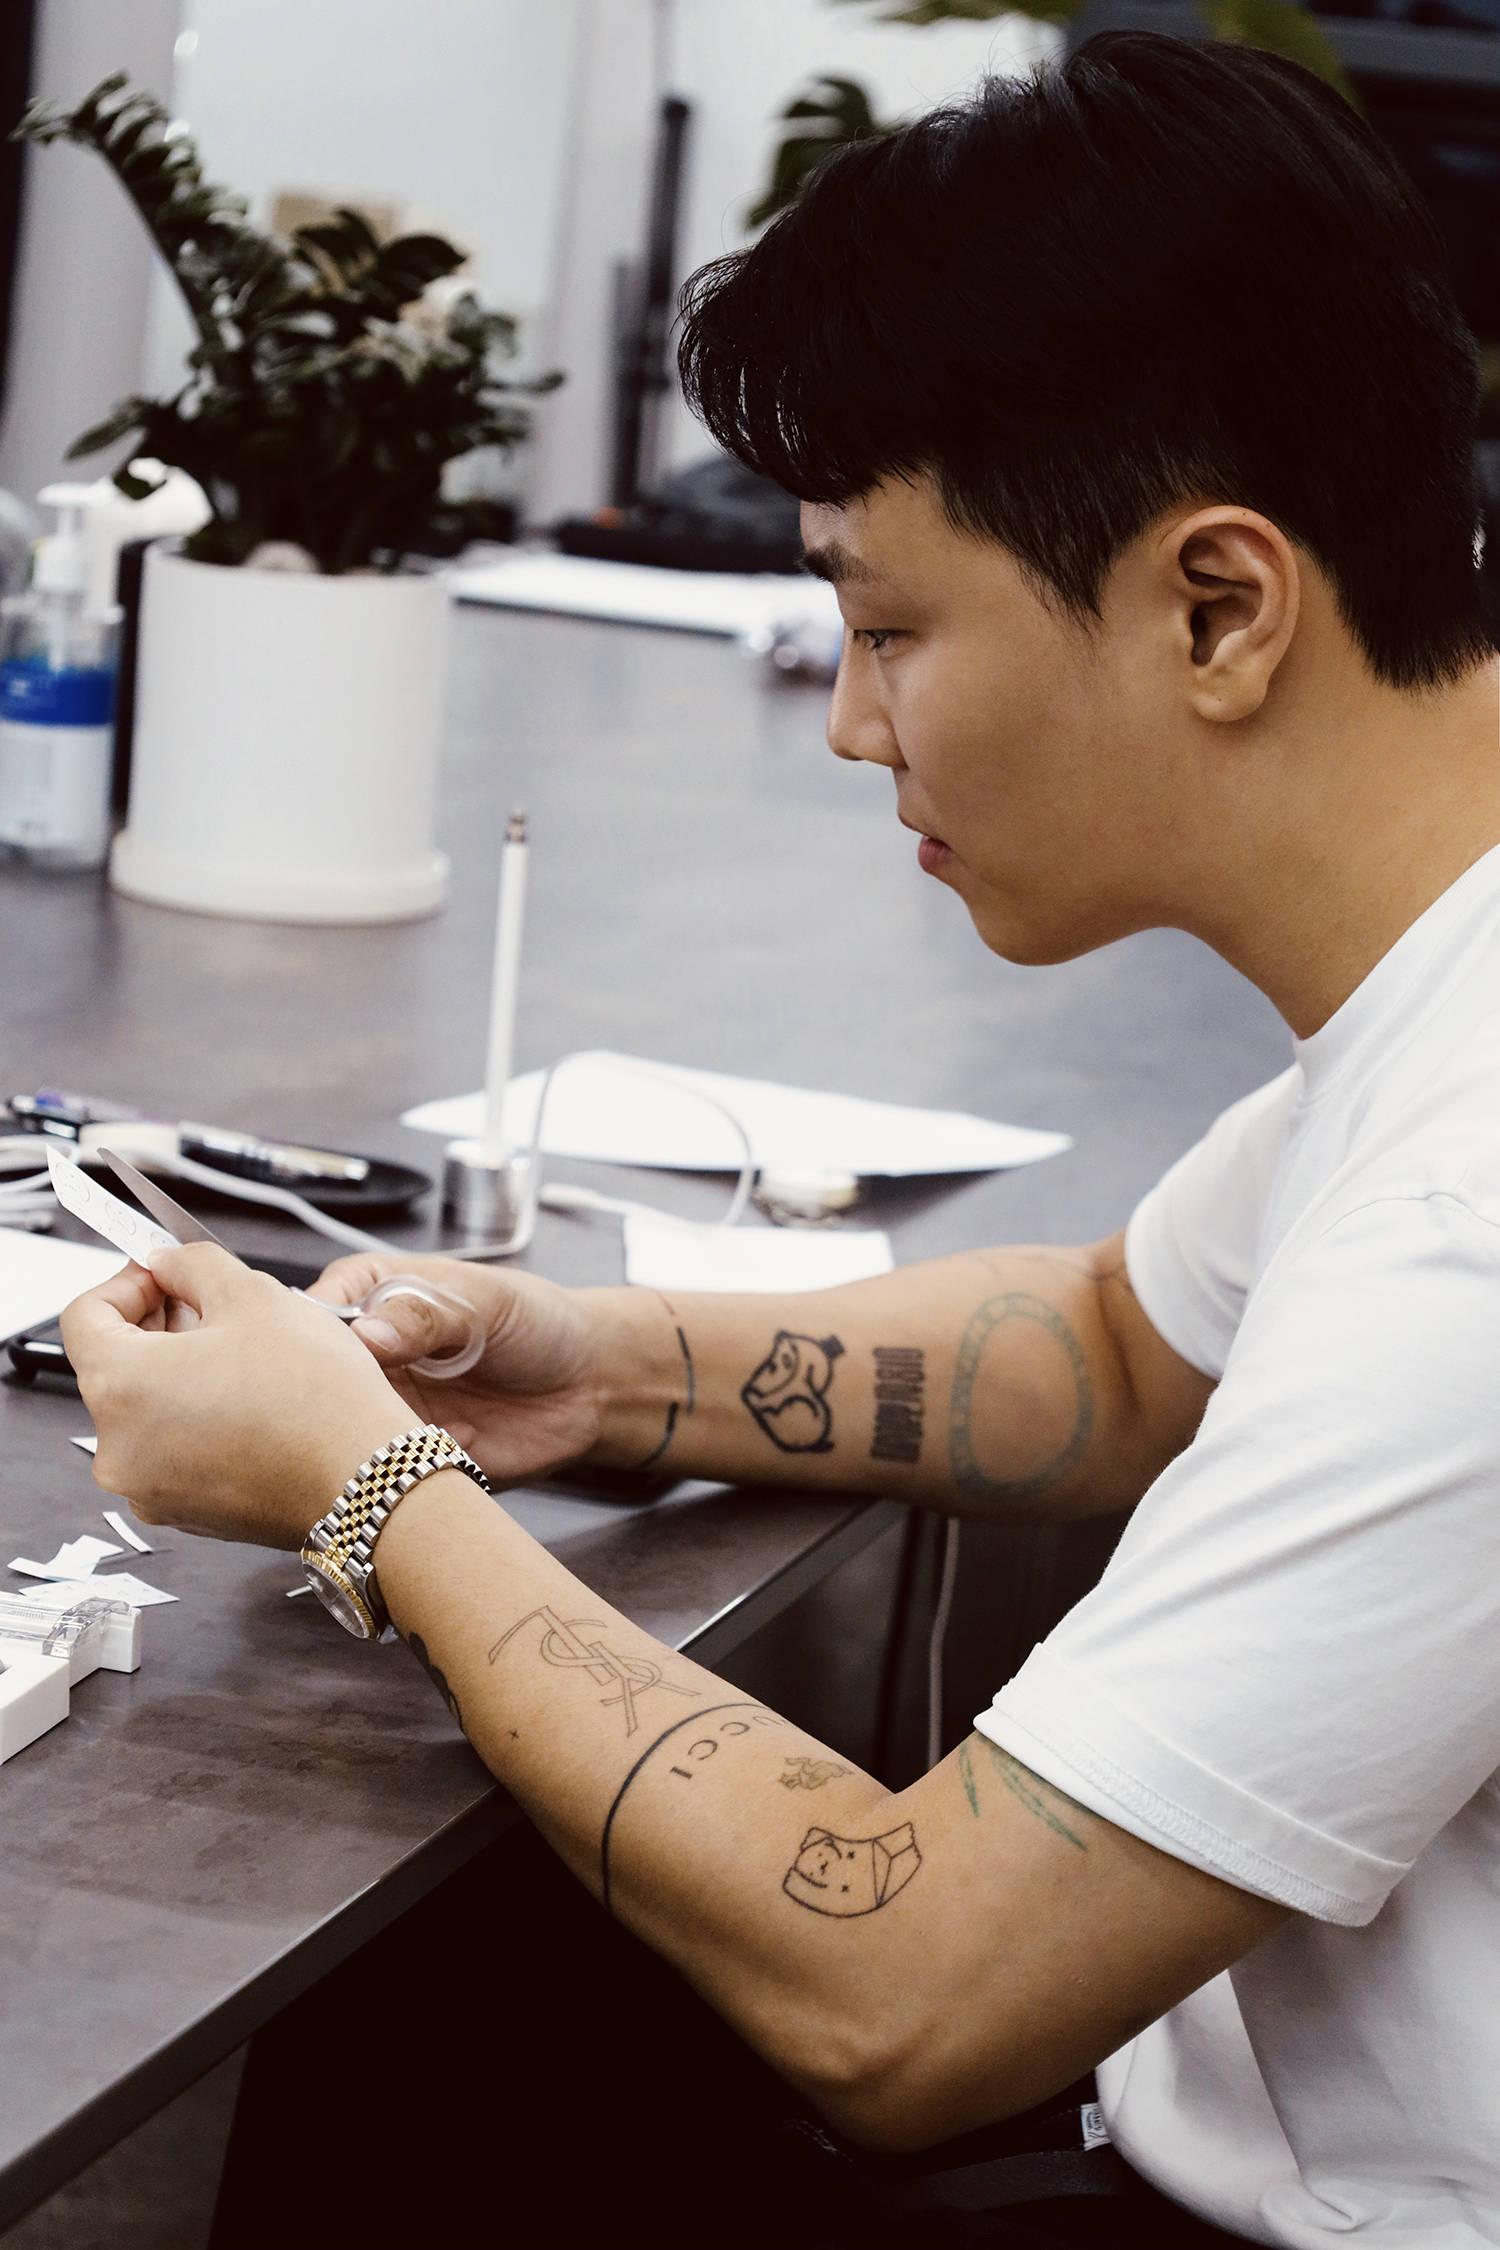 Korean tattooer Sop prepping a stencil for a tattoo